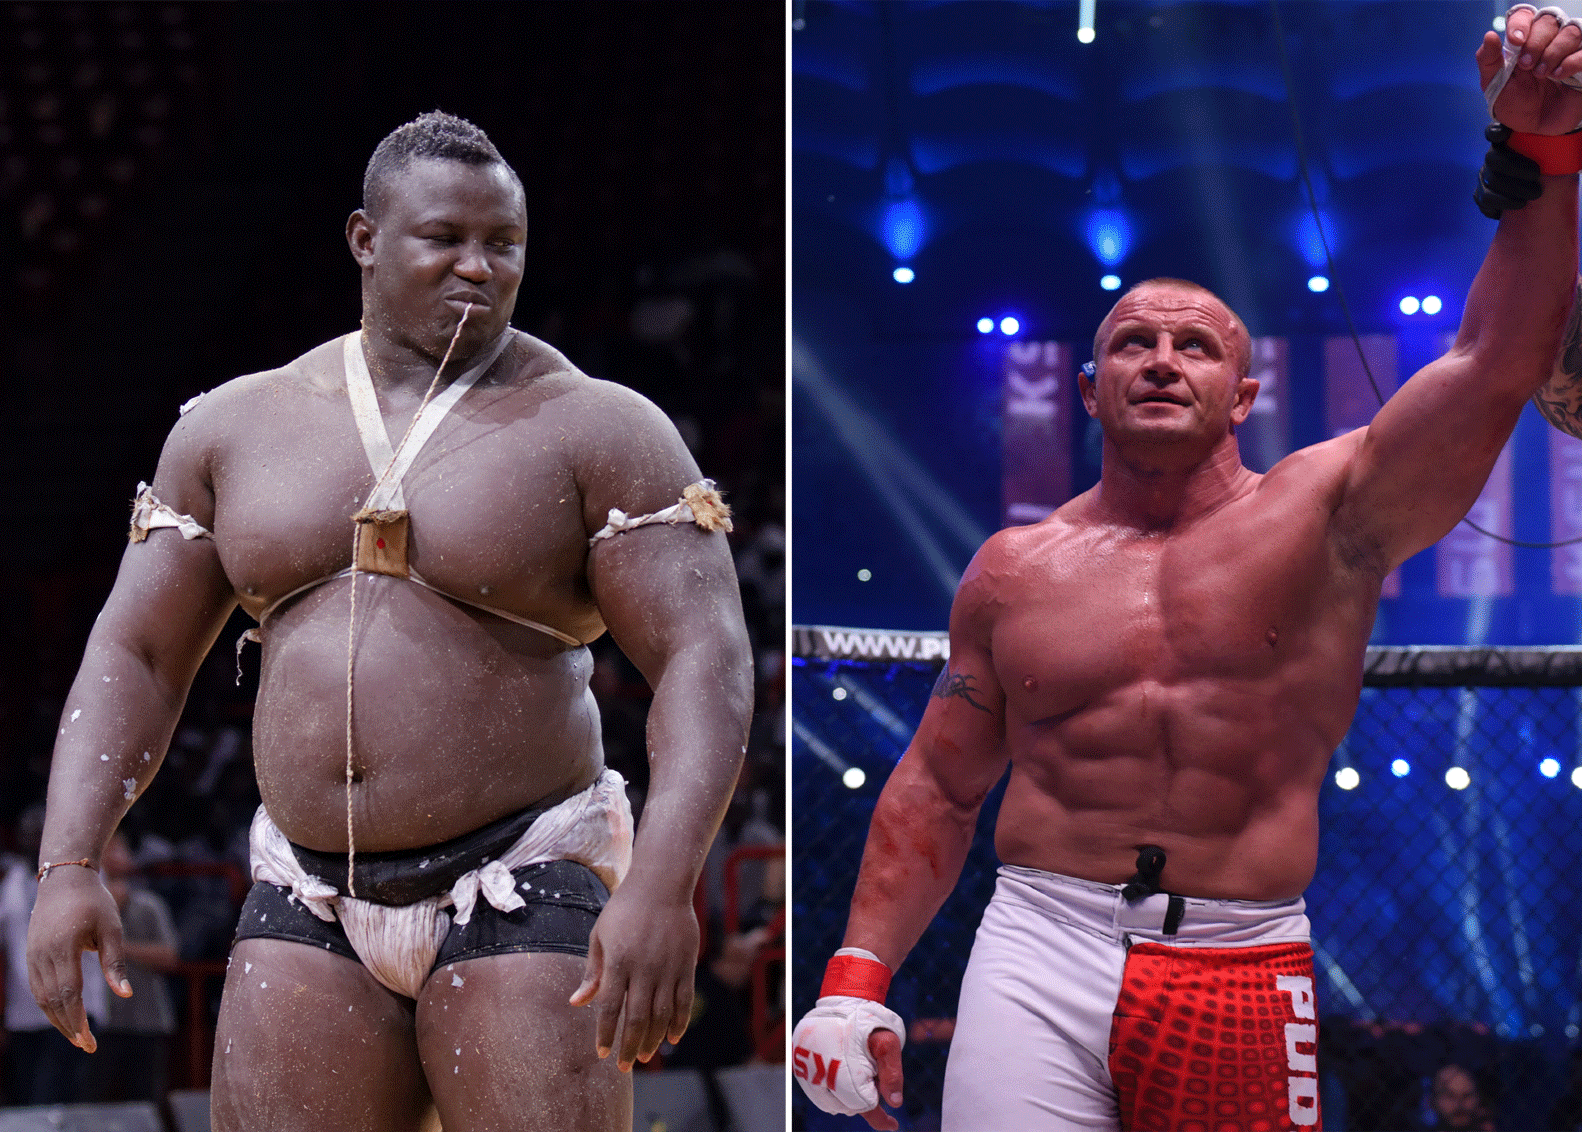 Sterkste man maakt MMA-comeback tegen knock-out reus van 140 kilo